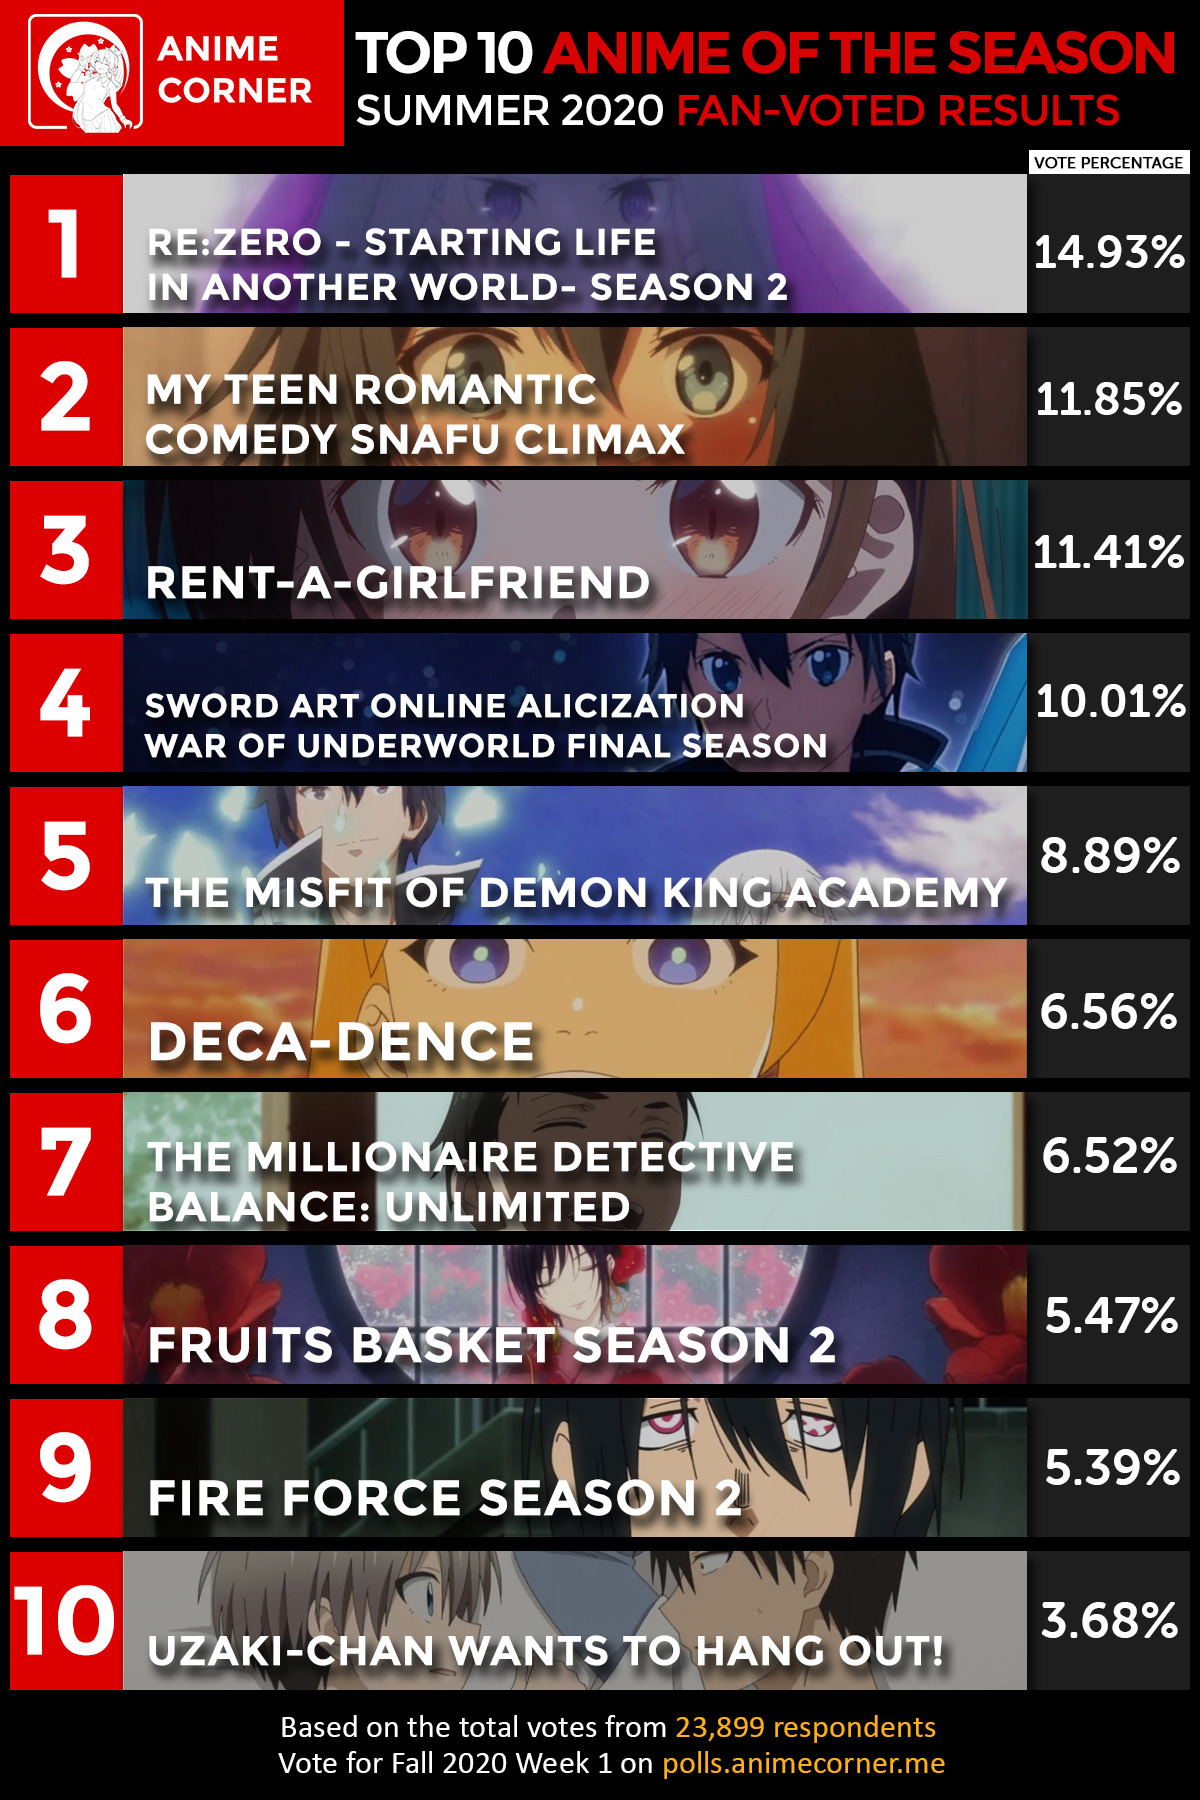 Top 10 Anime of the Season Summer 2020